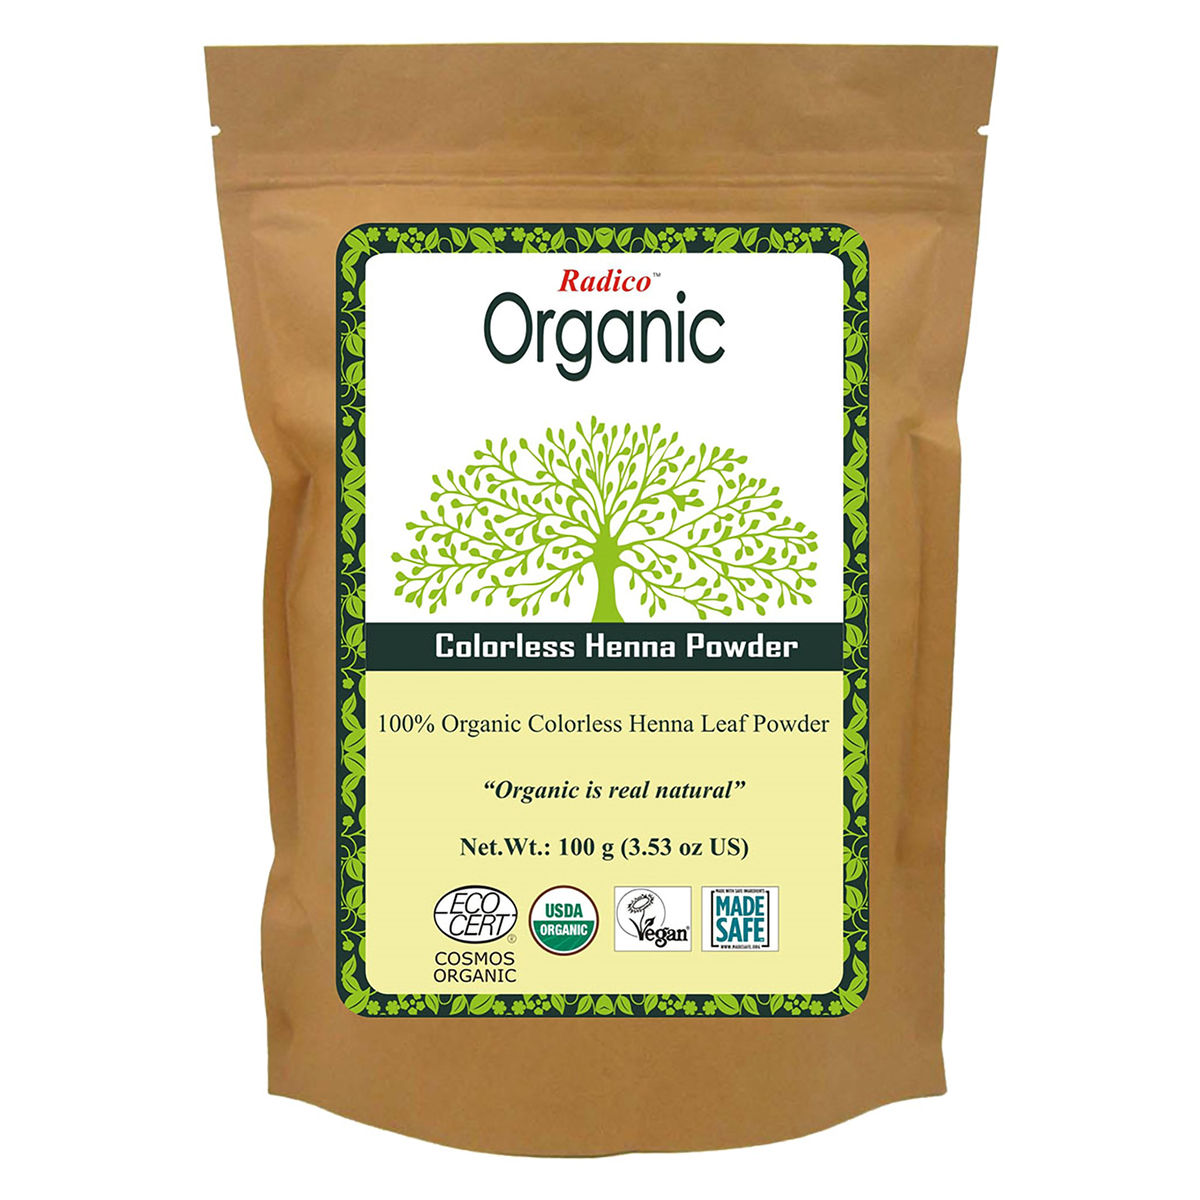 Buy Radico Organic Colorless Henna Leaf Powder, 100 gm Online